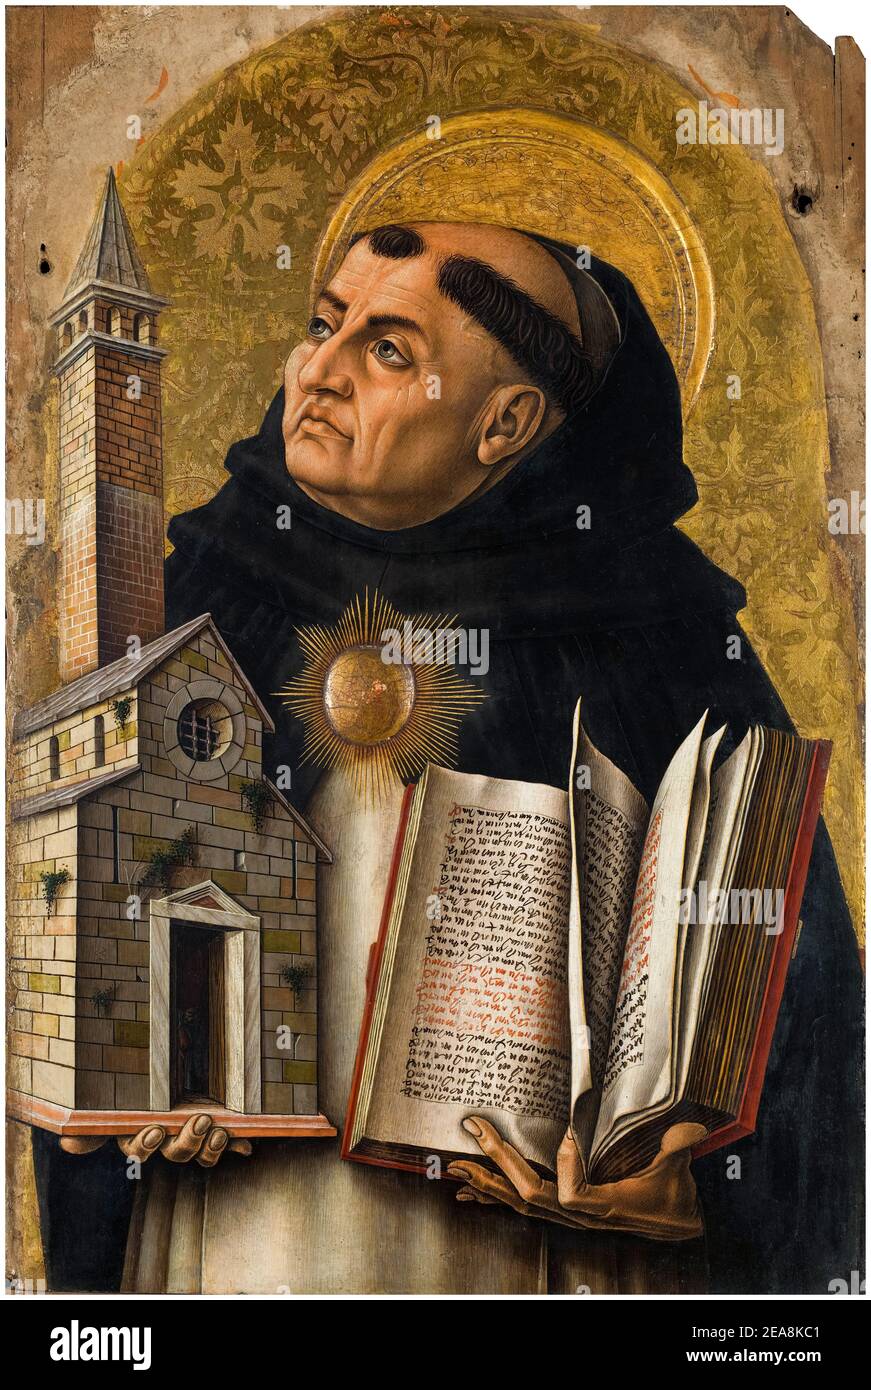 St Thomas Aquinas, (1225-1274), Italian, Philosopher, Dominican Friar, Catholic Priest, portrait painting by Carlo Crivelli, 1476 Stock Photo